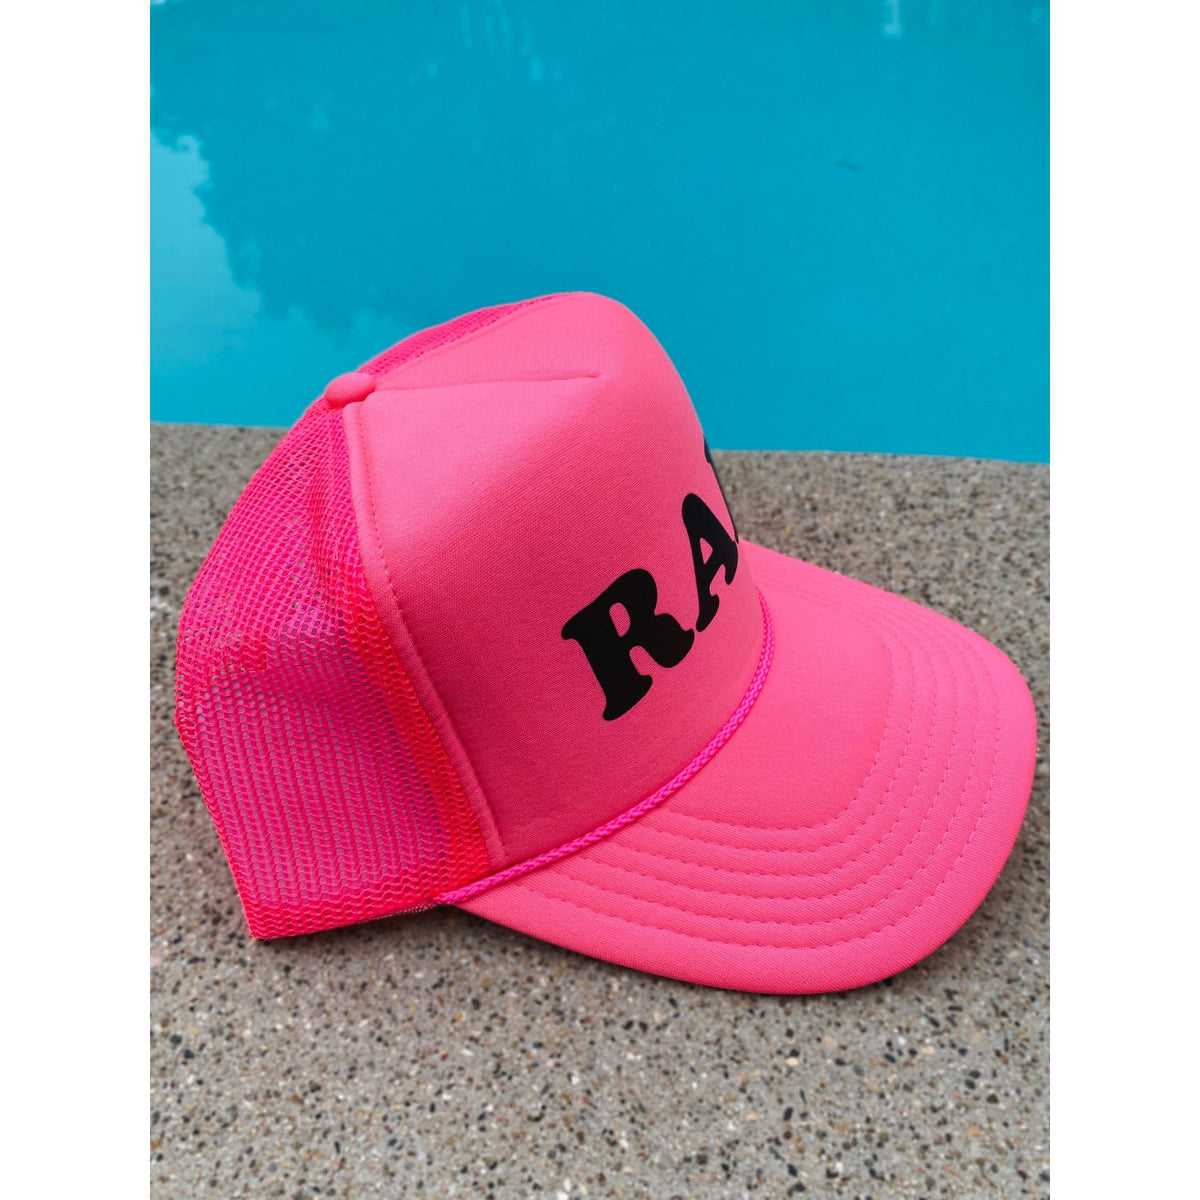 RAD Black and Pink Trucker Hat Hats TheFringeCultureCollective